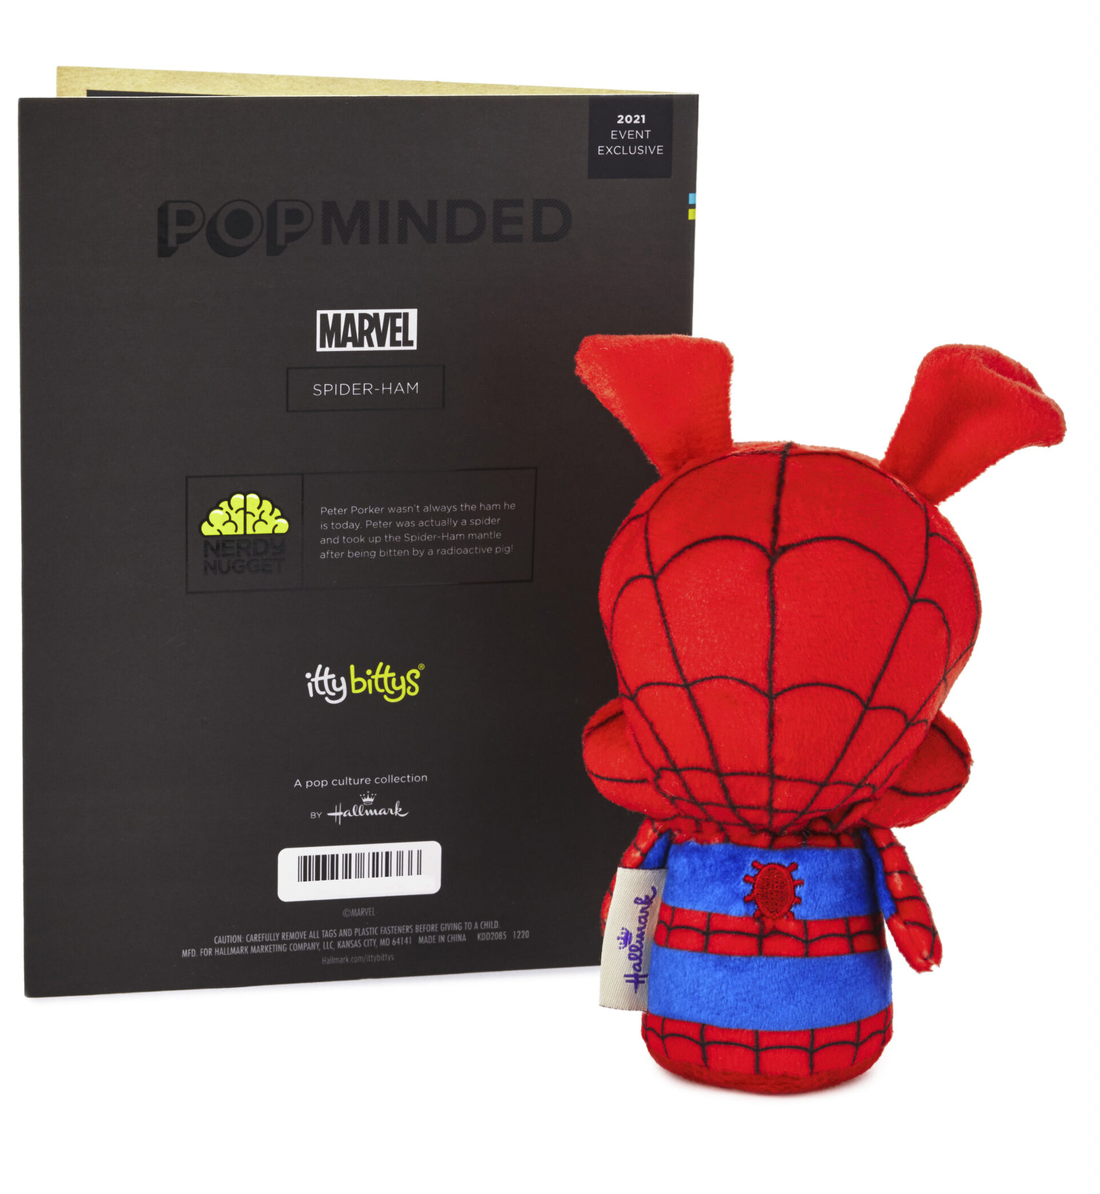 Hallmark 2021 Itty Bitty sMarvel Spider-Ham Plush Pop Minded New with Card